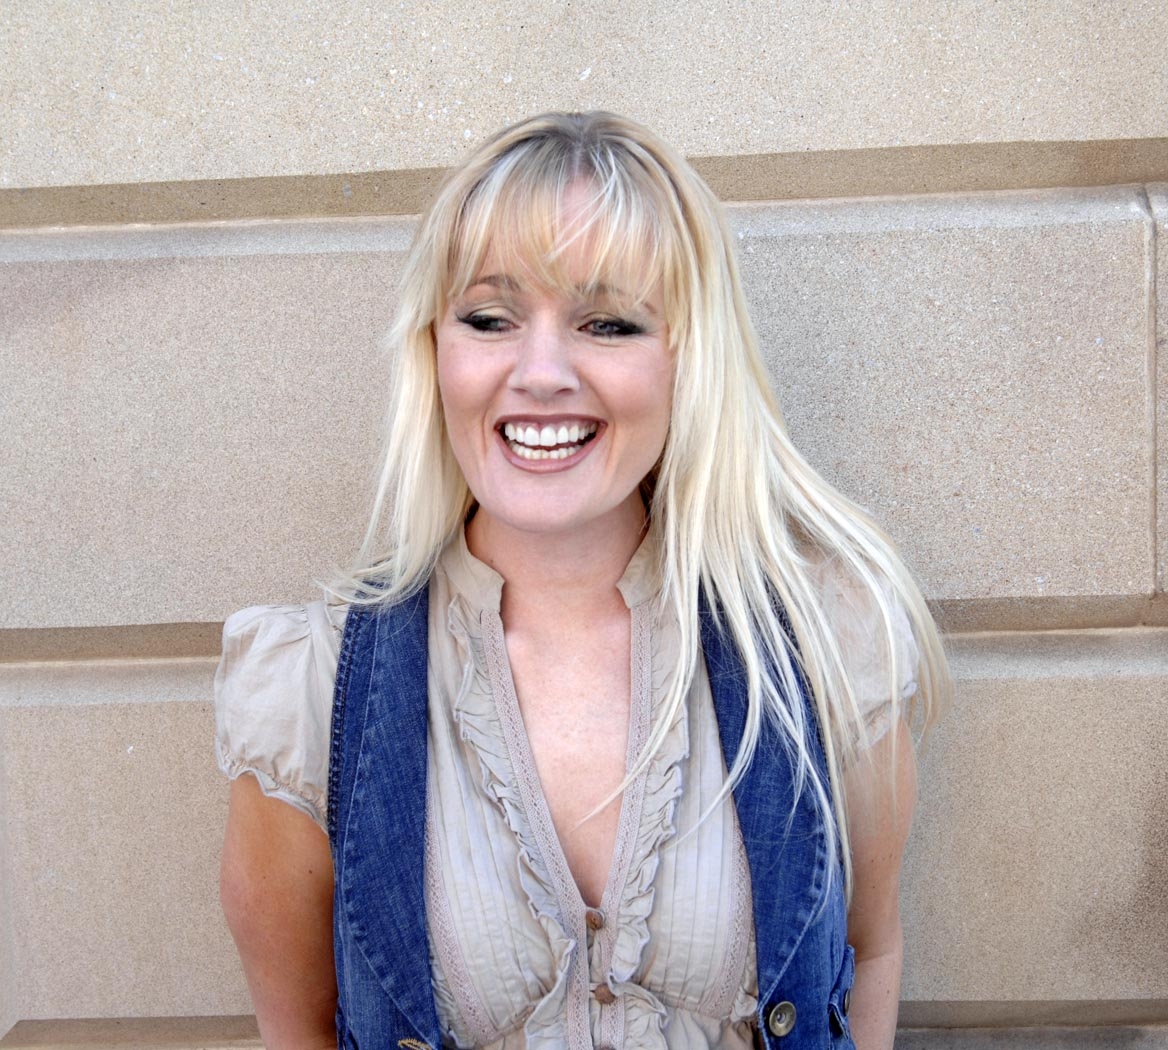 Image of Presenter Jill Daley smiling